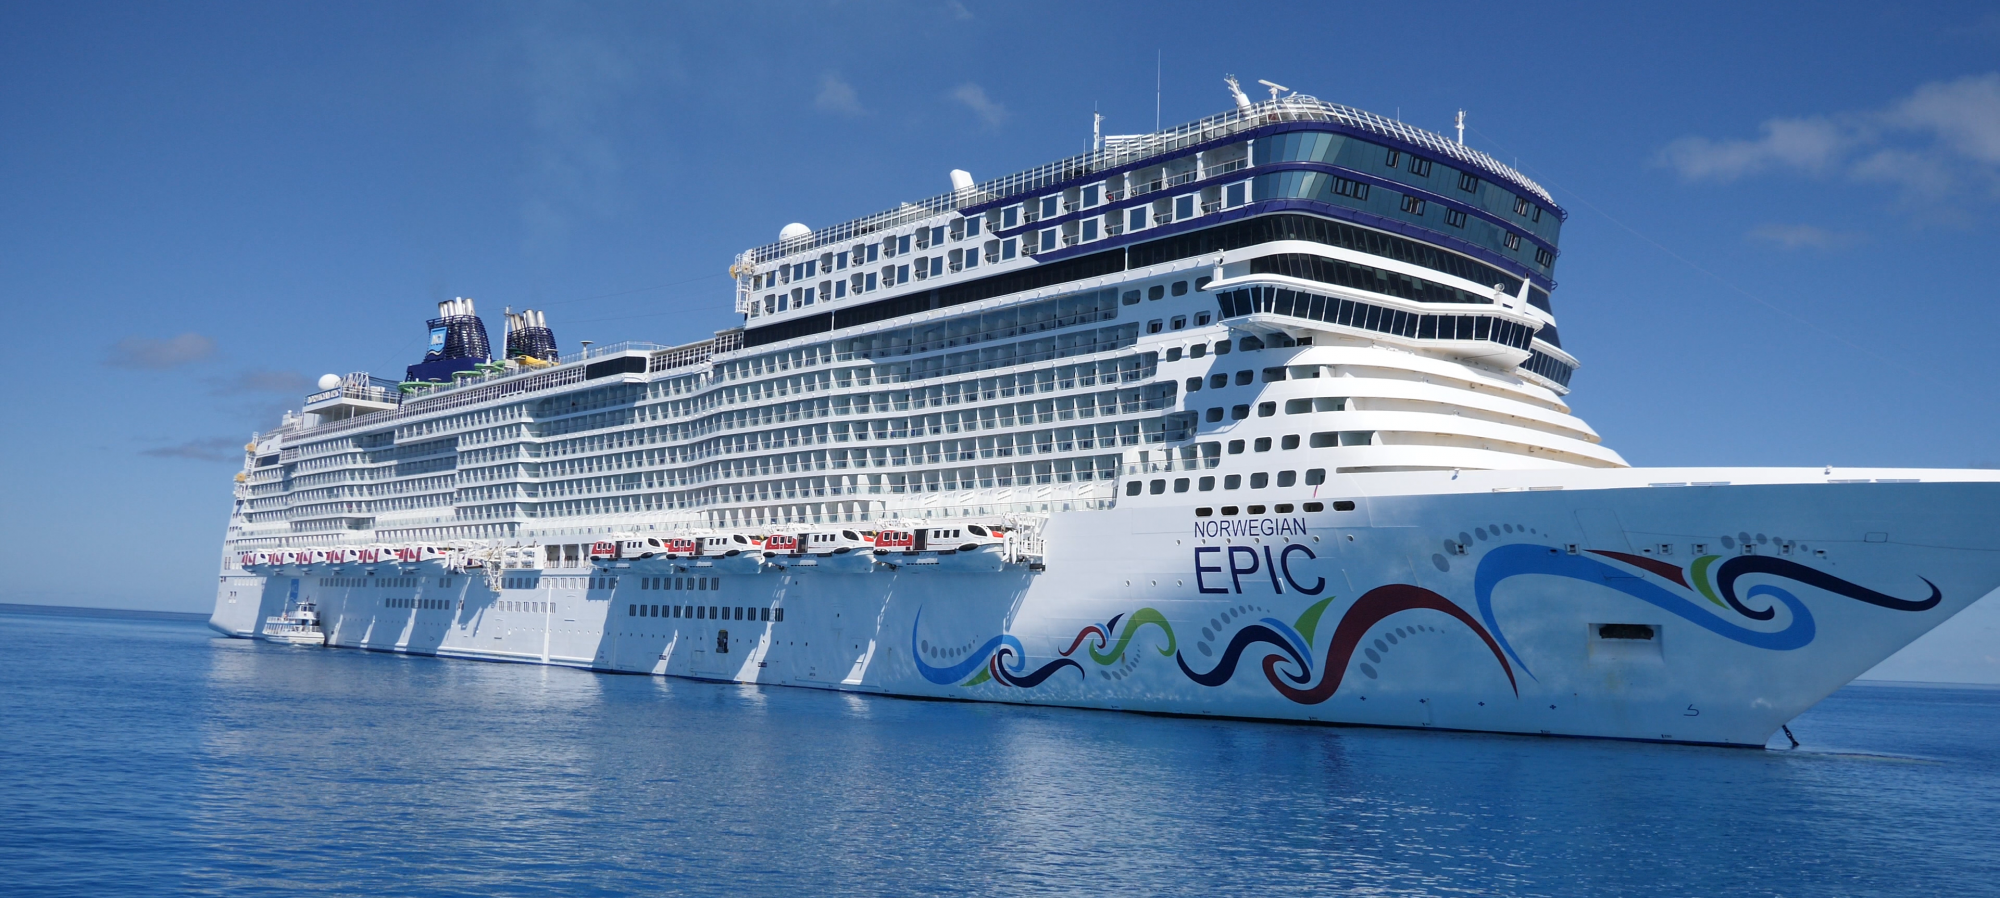 norwegian epic repositioning cruise